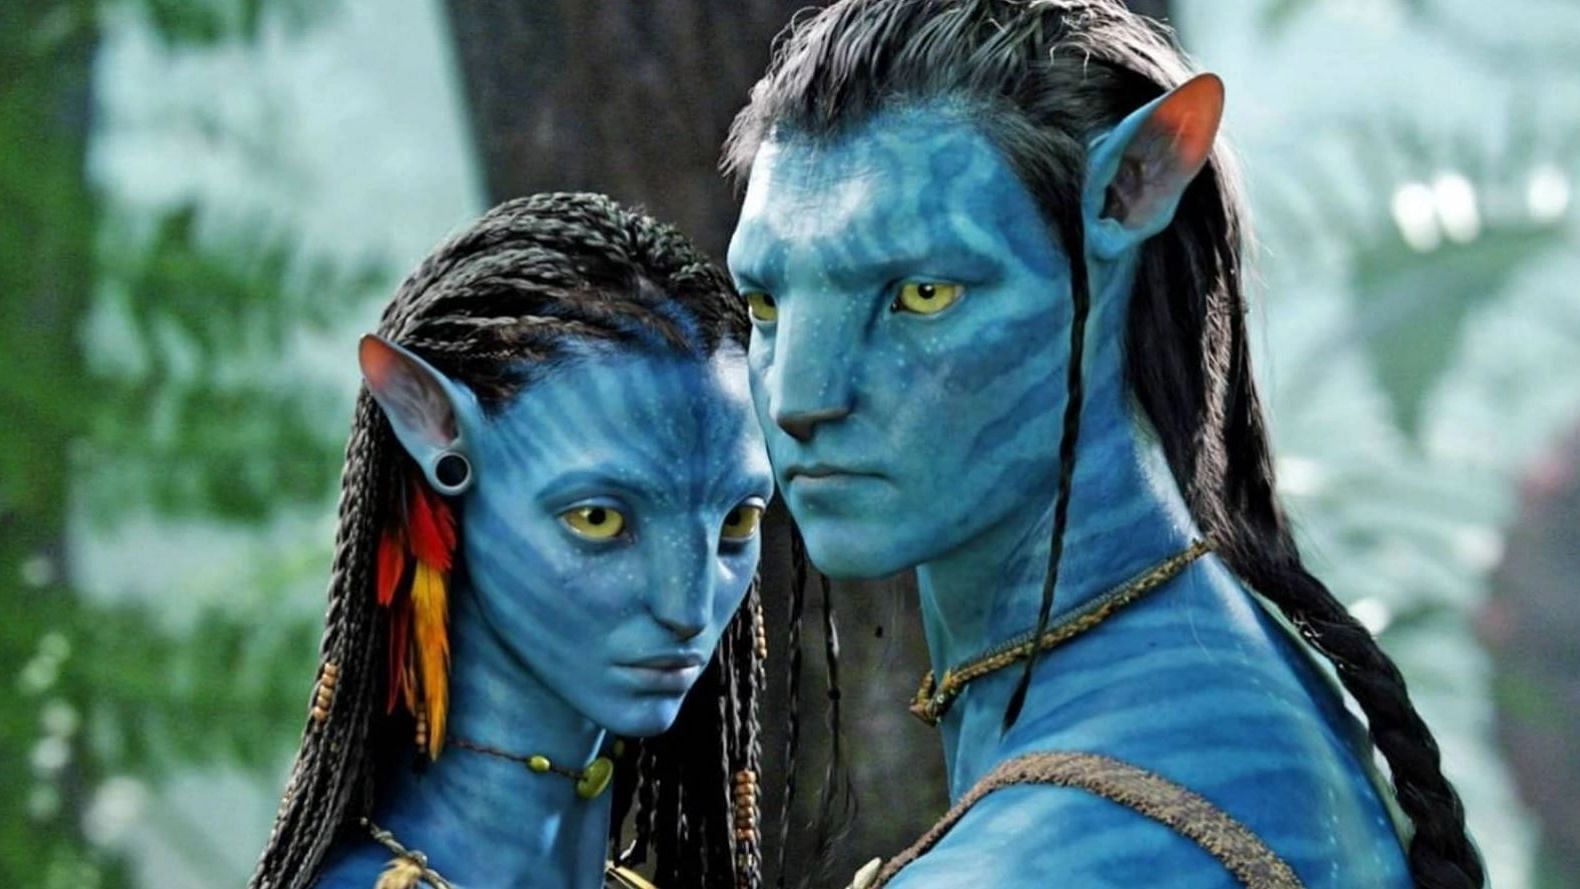 <div class="paragraphs"><p>'Avatar: The Way of Water 16 दिसंबर को सिनेमाघरों में हुई रिलीज.</p></div>